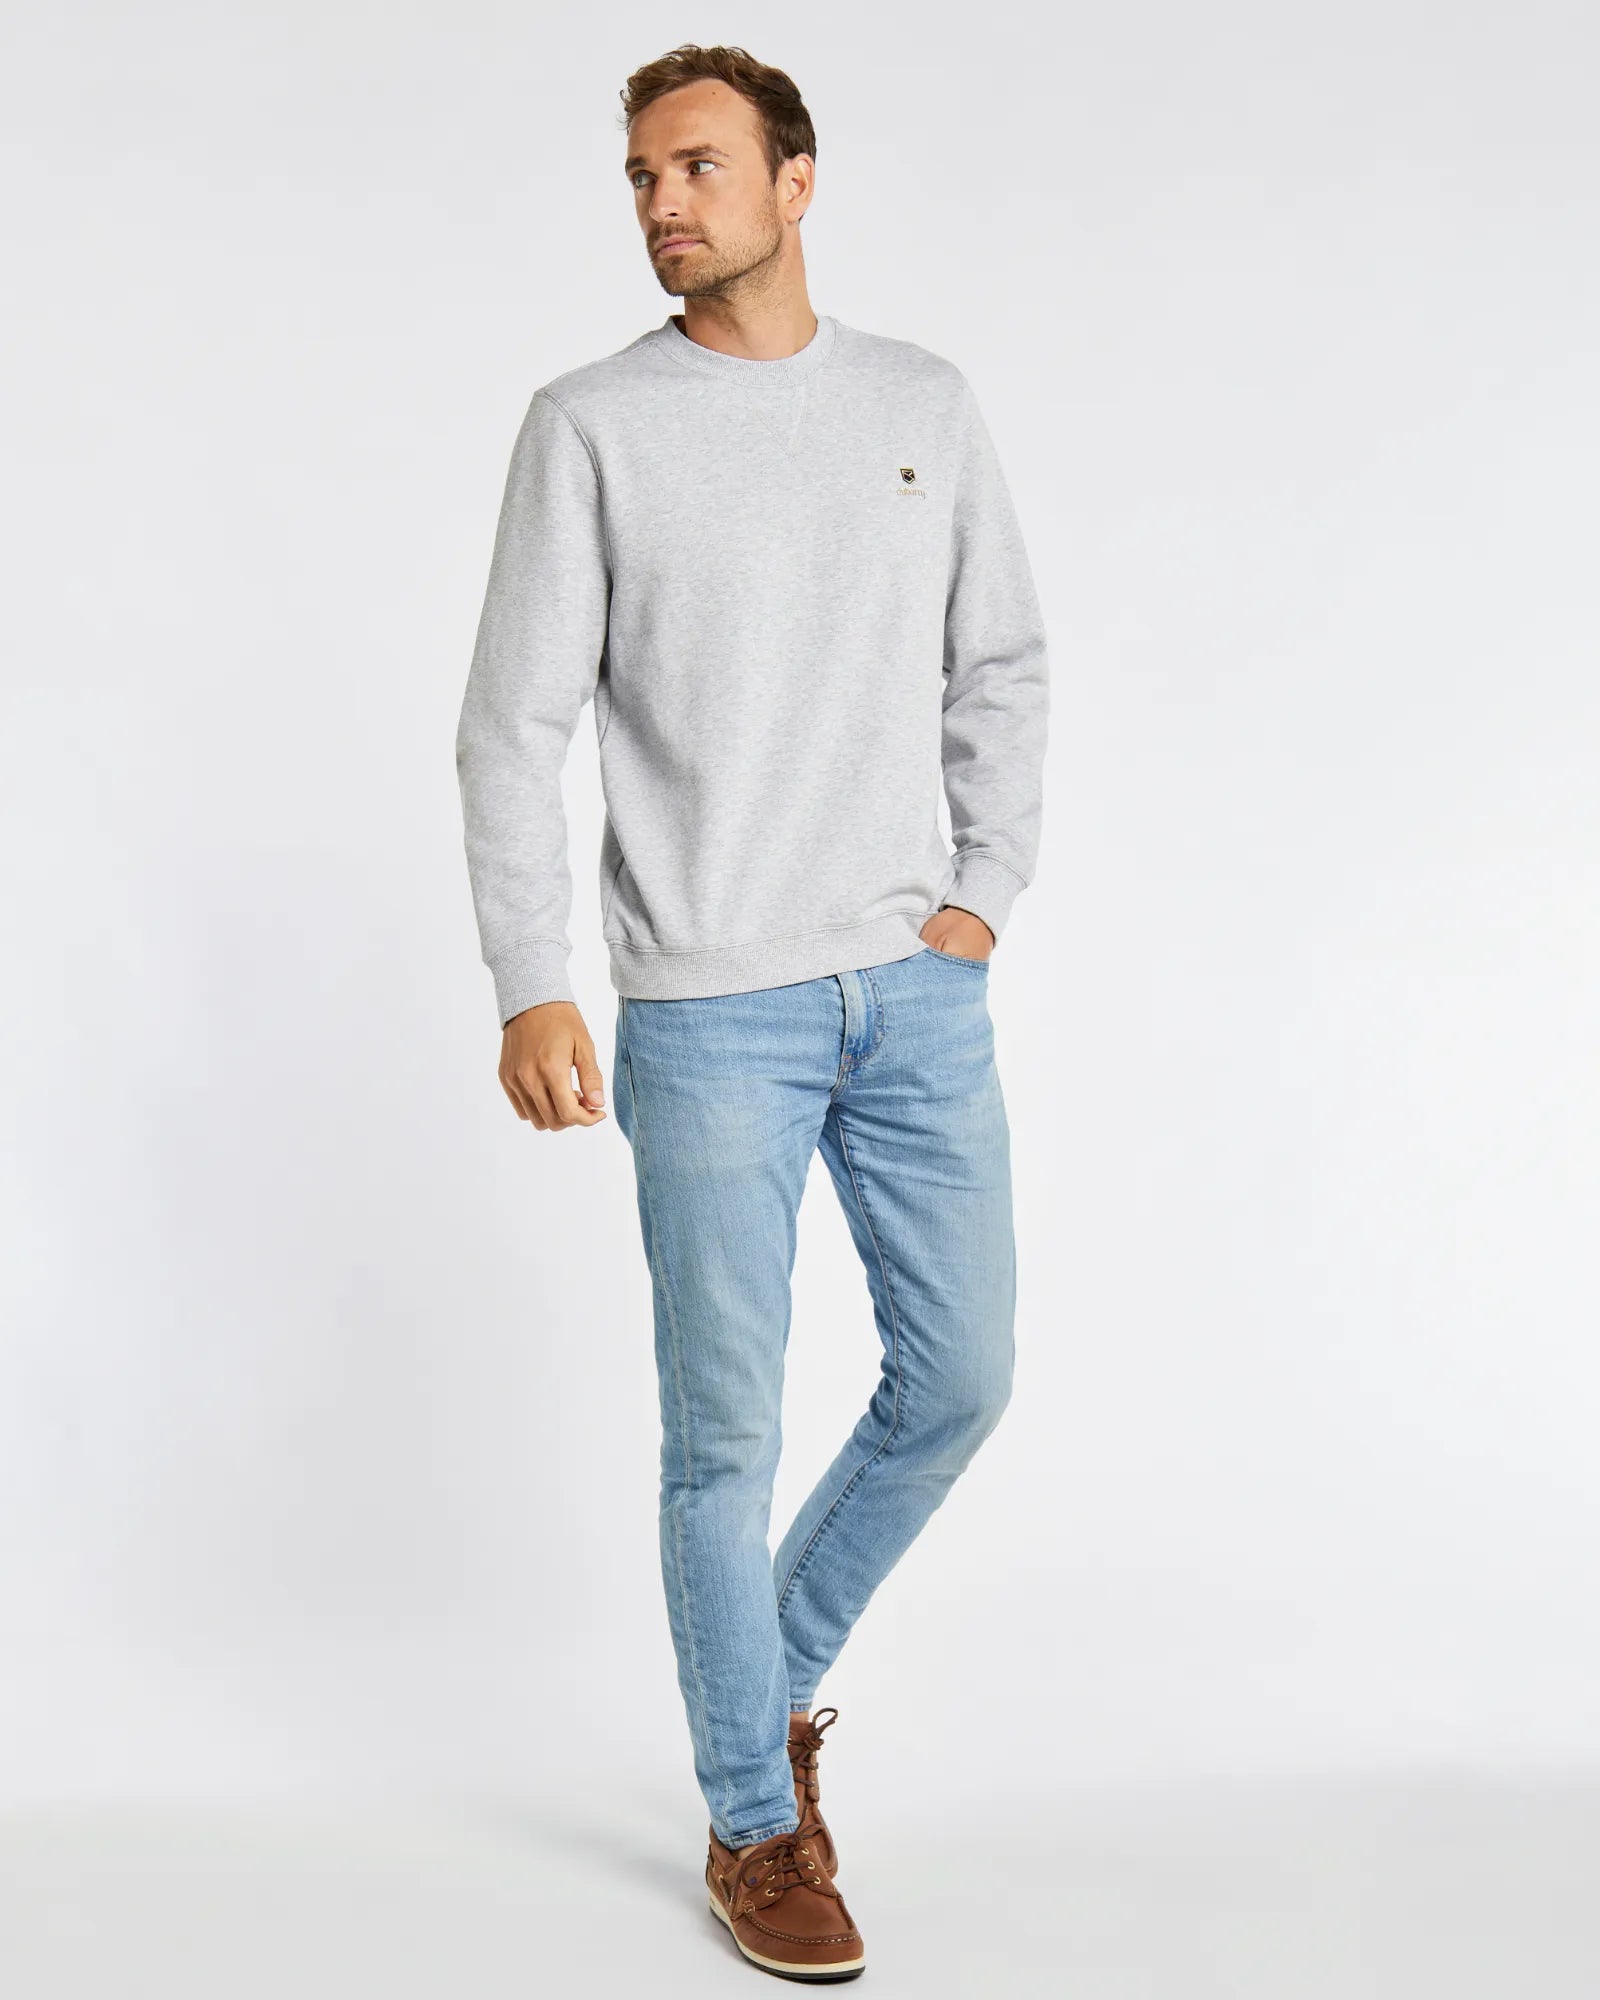 Spencer Sweatshirt - Grey Marl